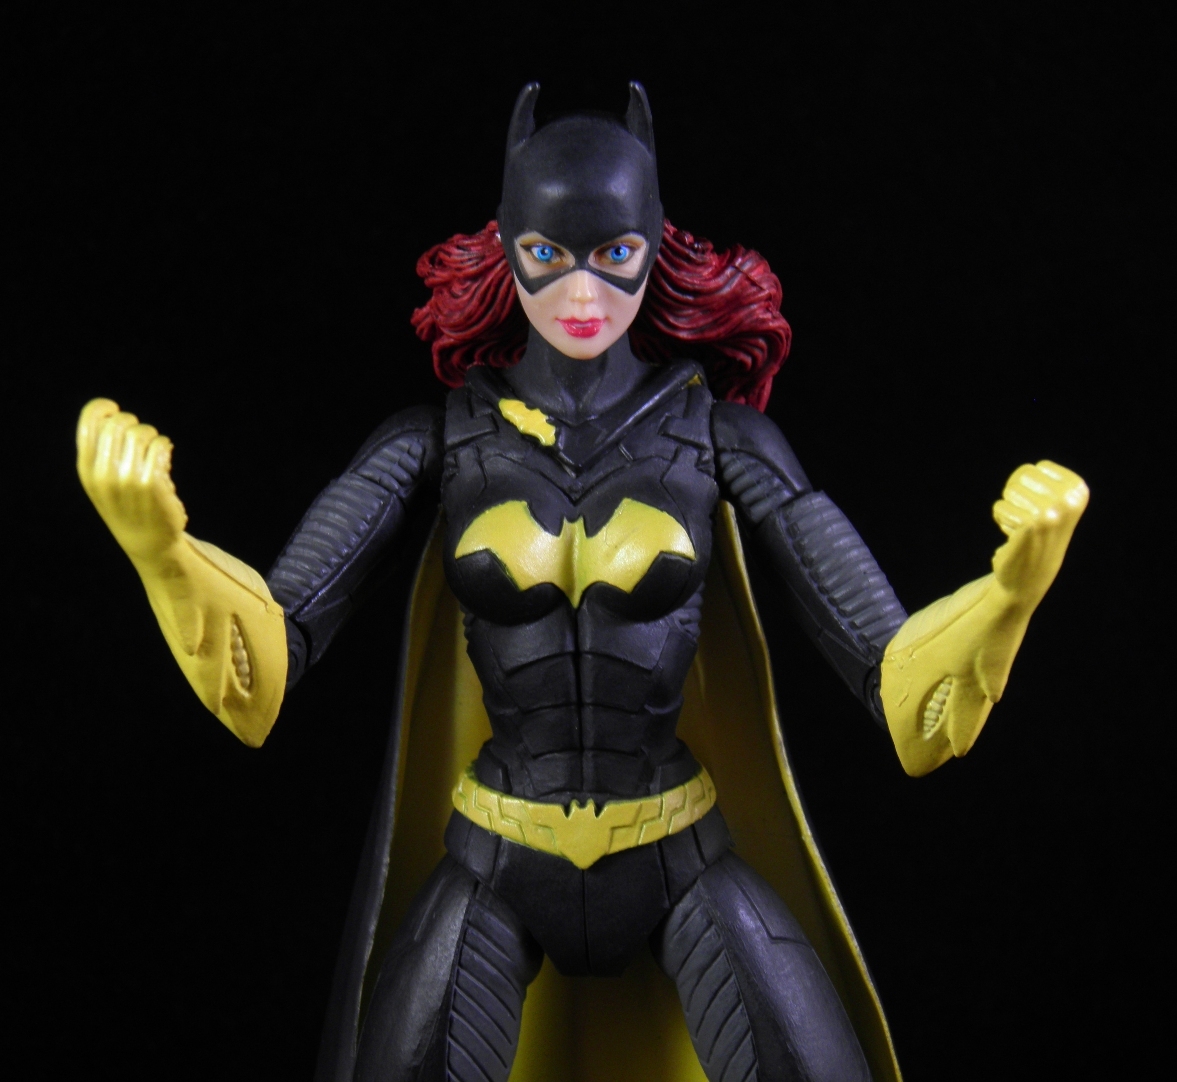 Fisher Price Imaginext Barbara Gordon Batgirl Bat girl yellow black cape ma...